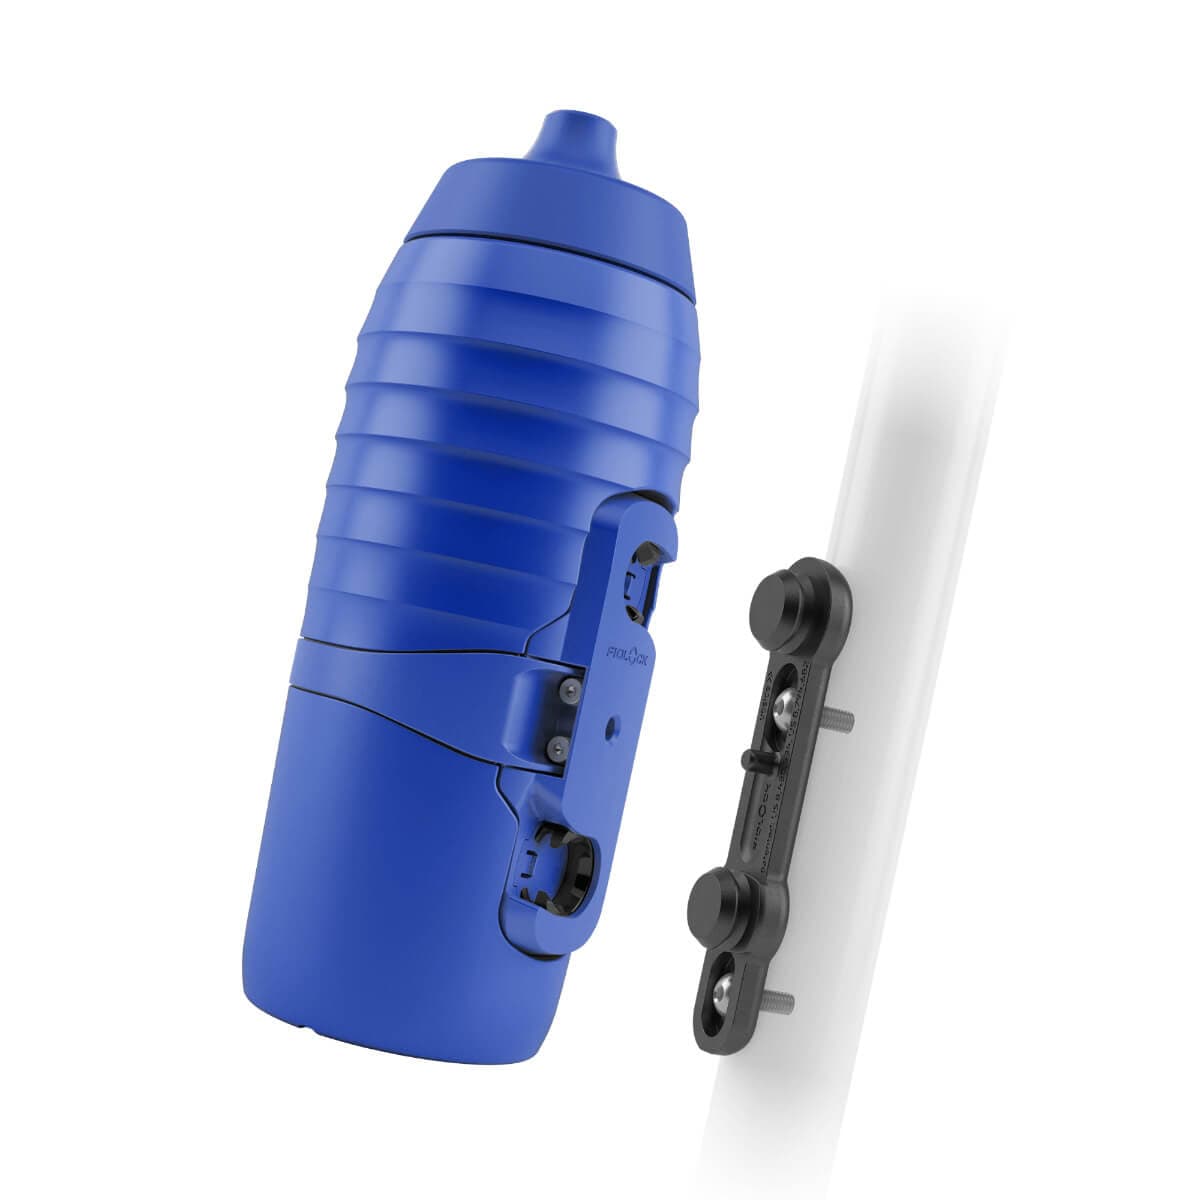 The blue bike bottle TWIST x KEEGO 0.6L and magnetic FIDLOCK bottle cage